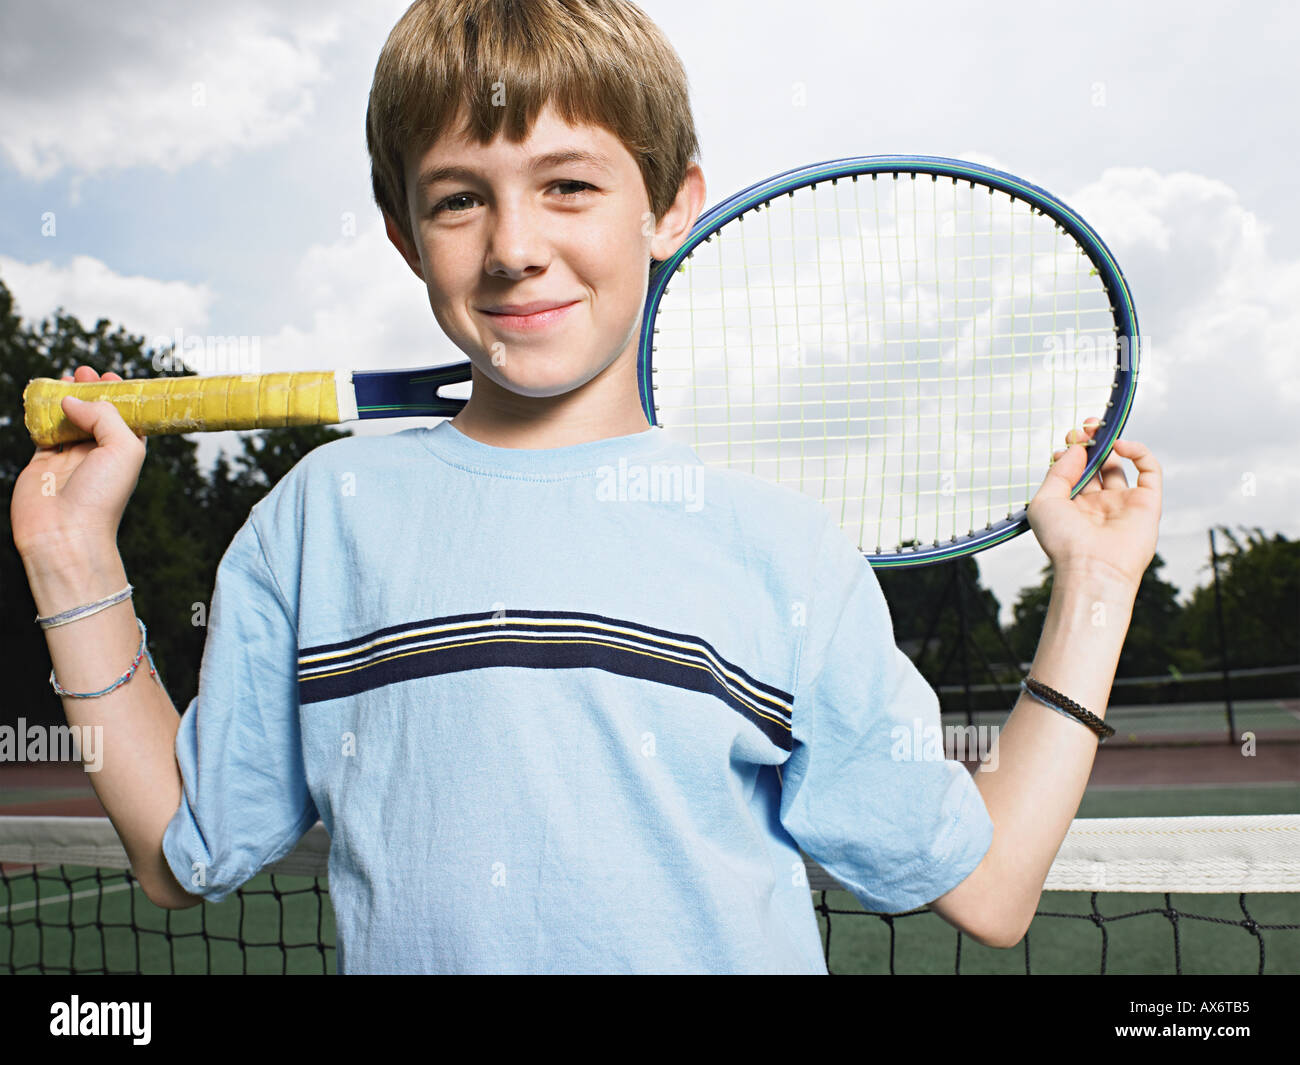 Boy holding tennis racket Stock Photo